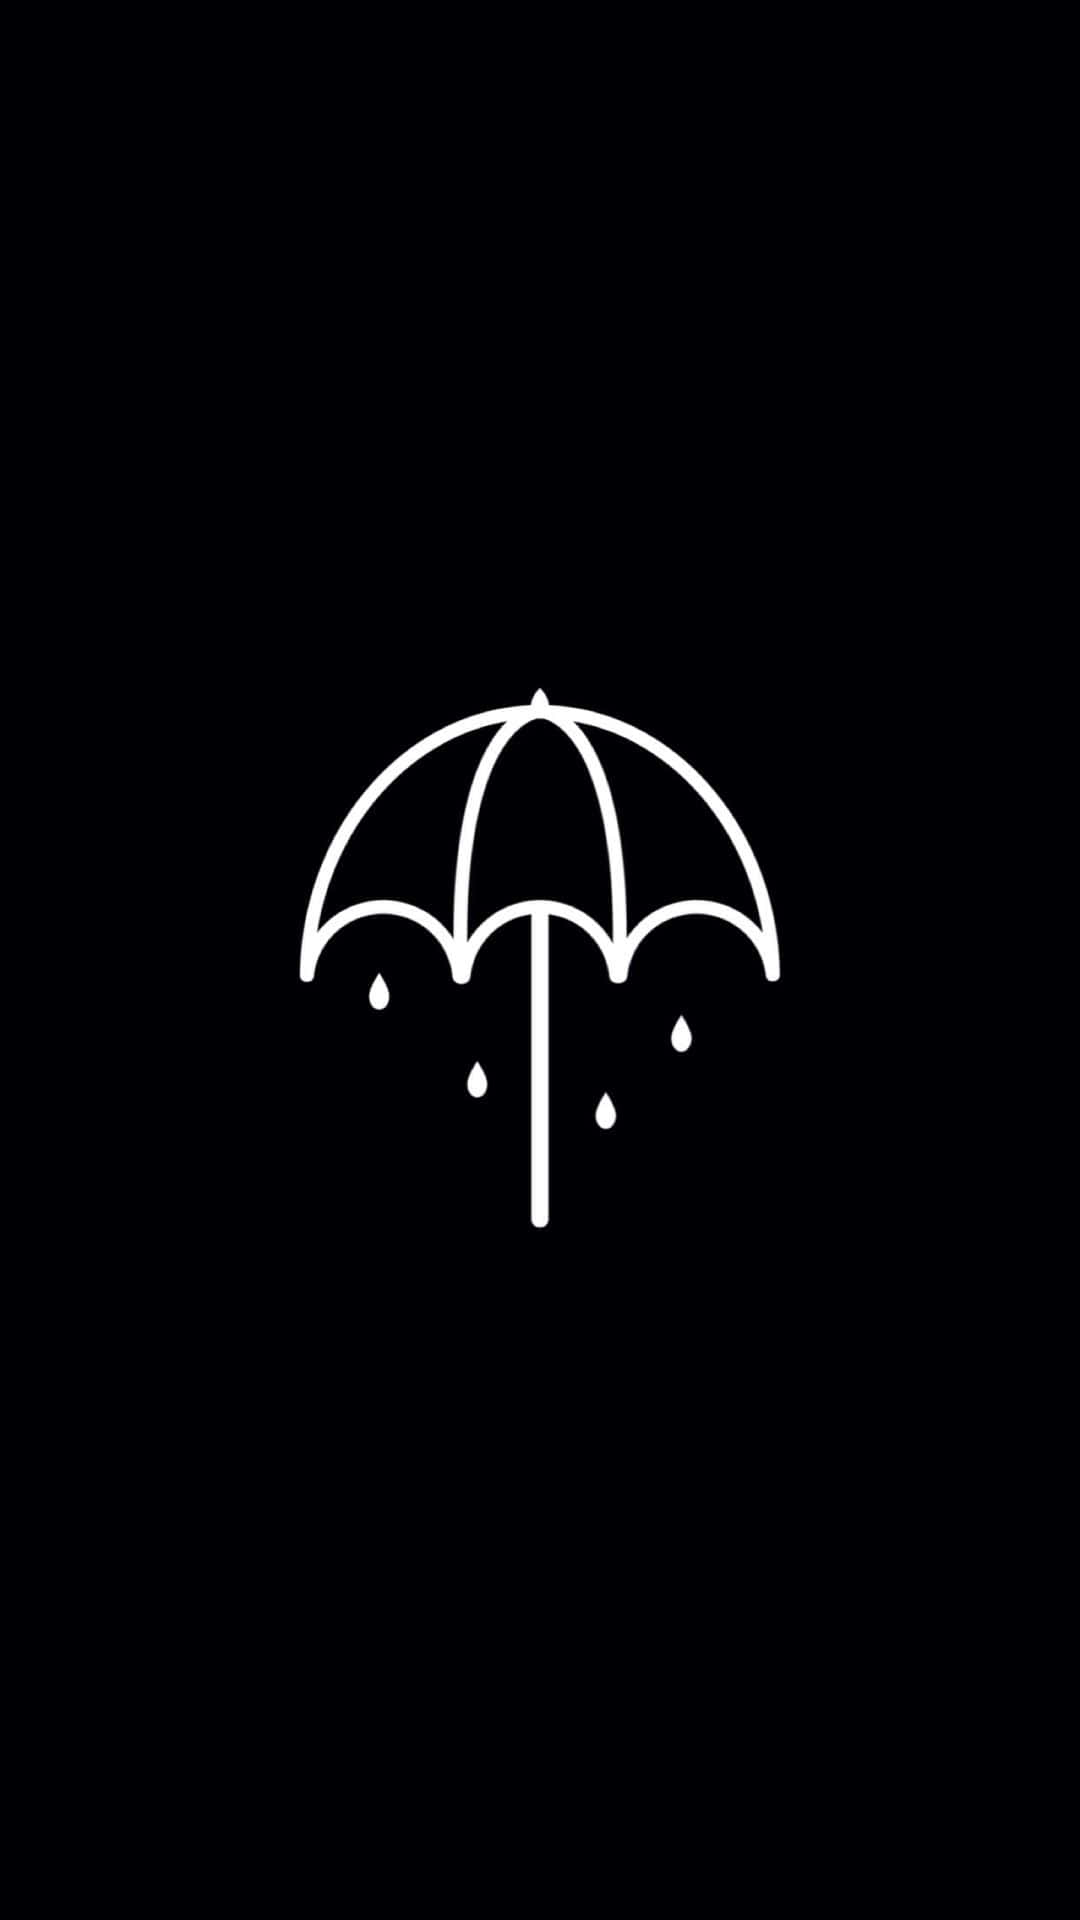 Minimalist Umbrella Design Background